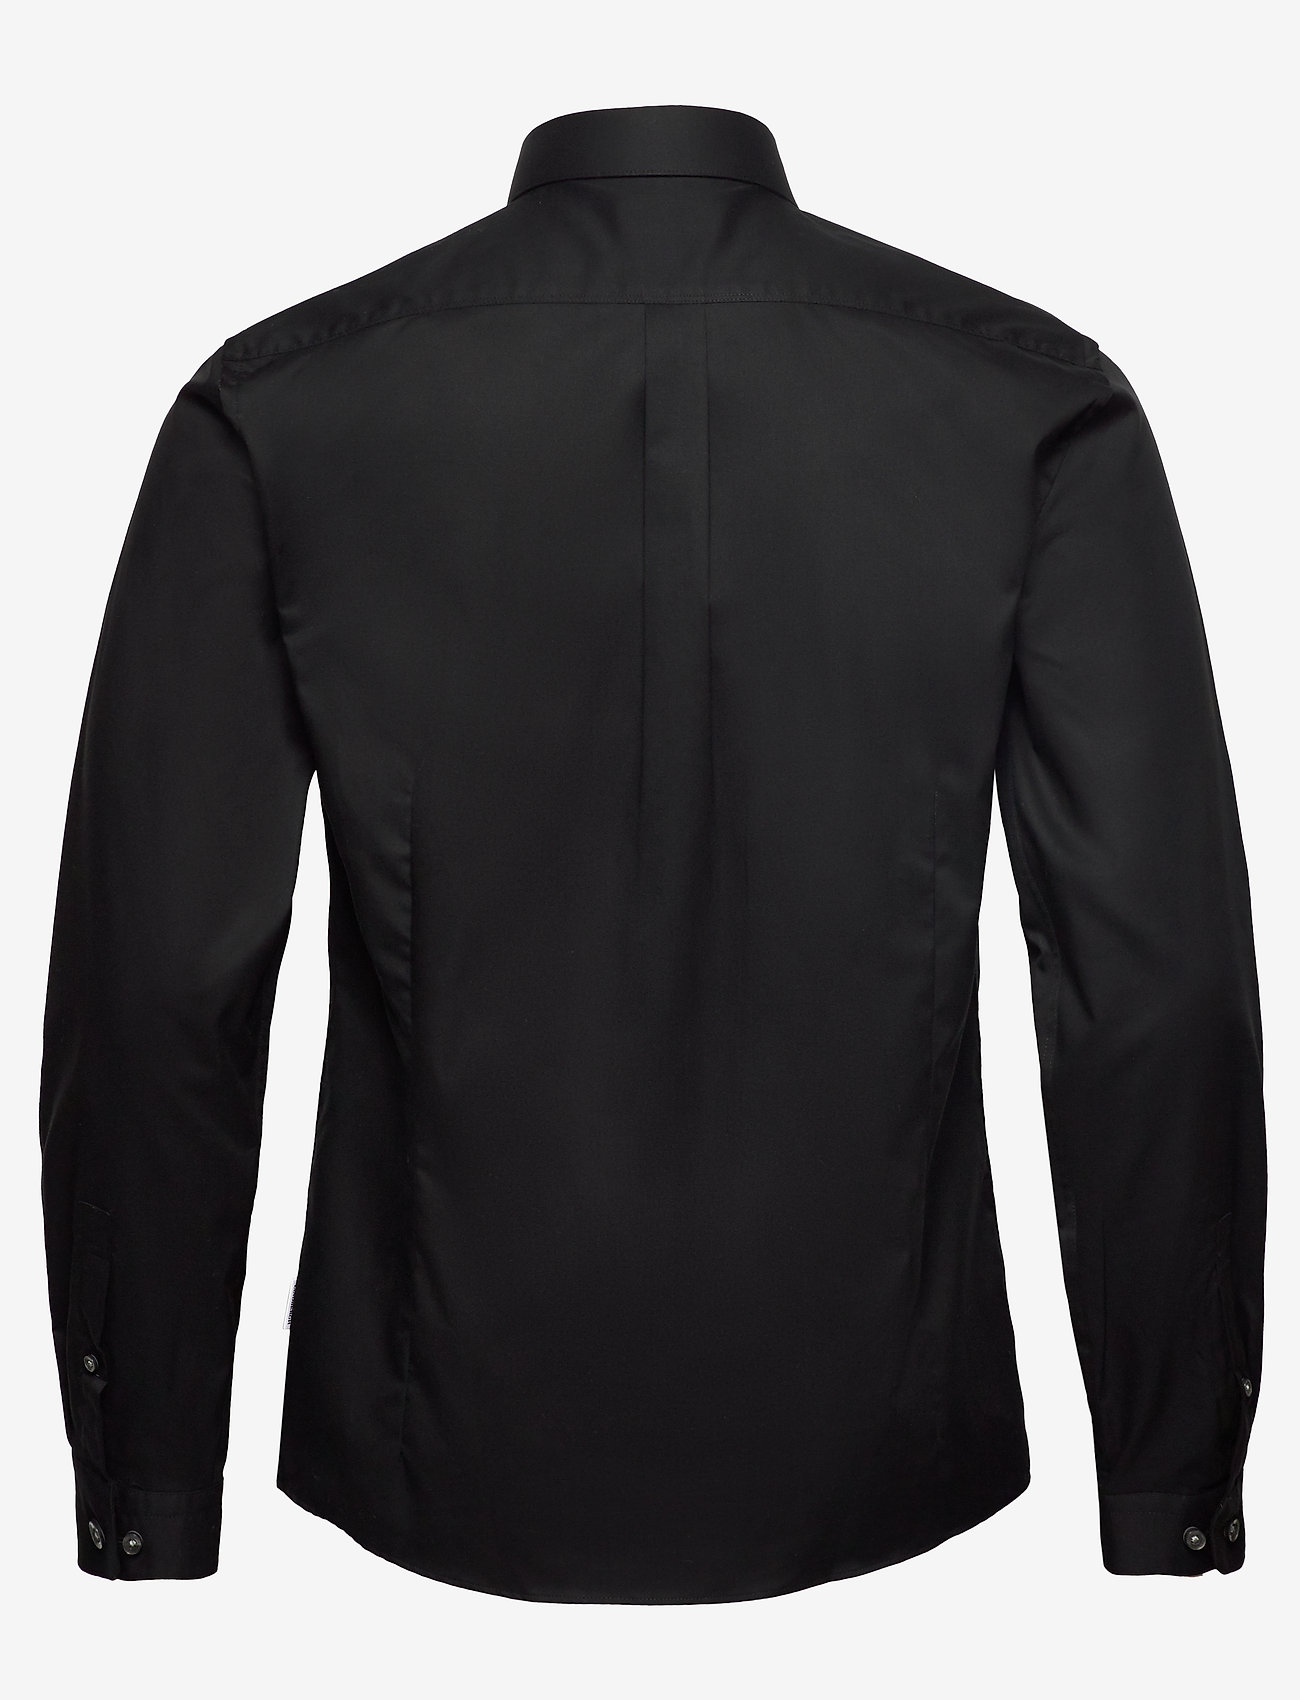 Lindbergh - Plain twill stretch shirt L/S - basic skjortor - black - 1